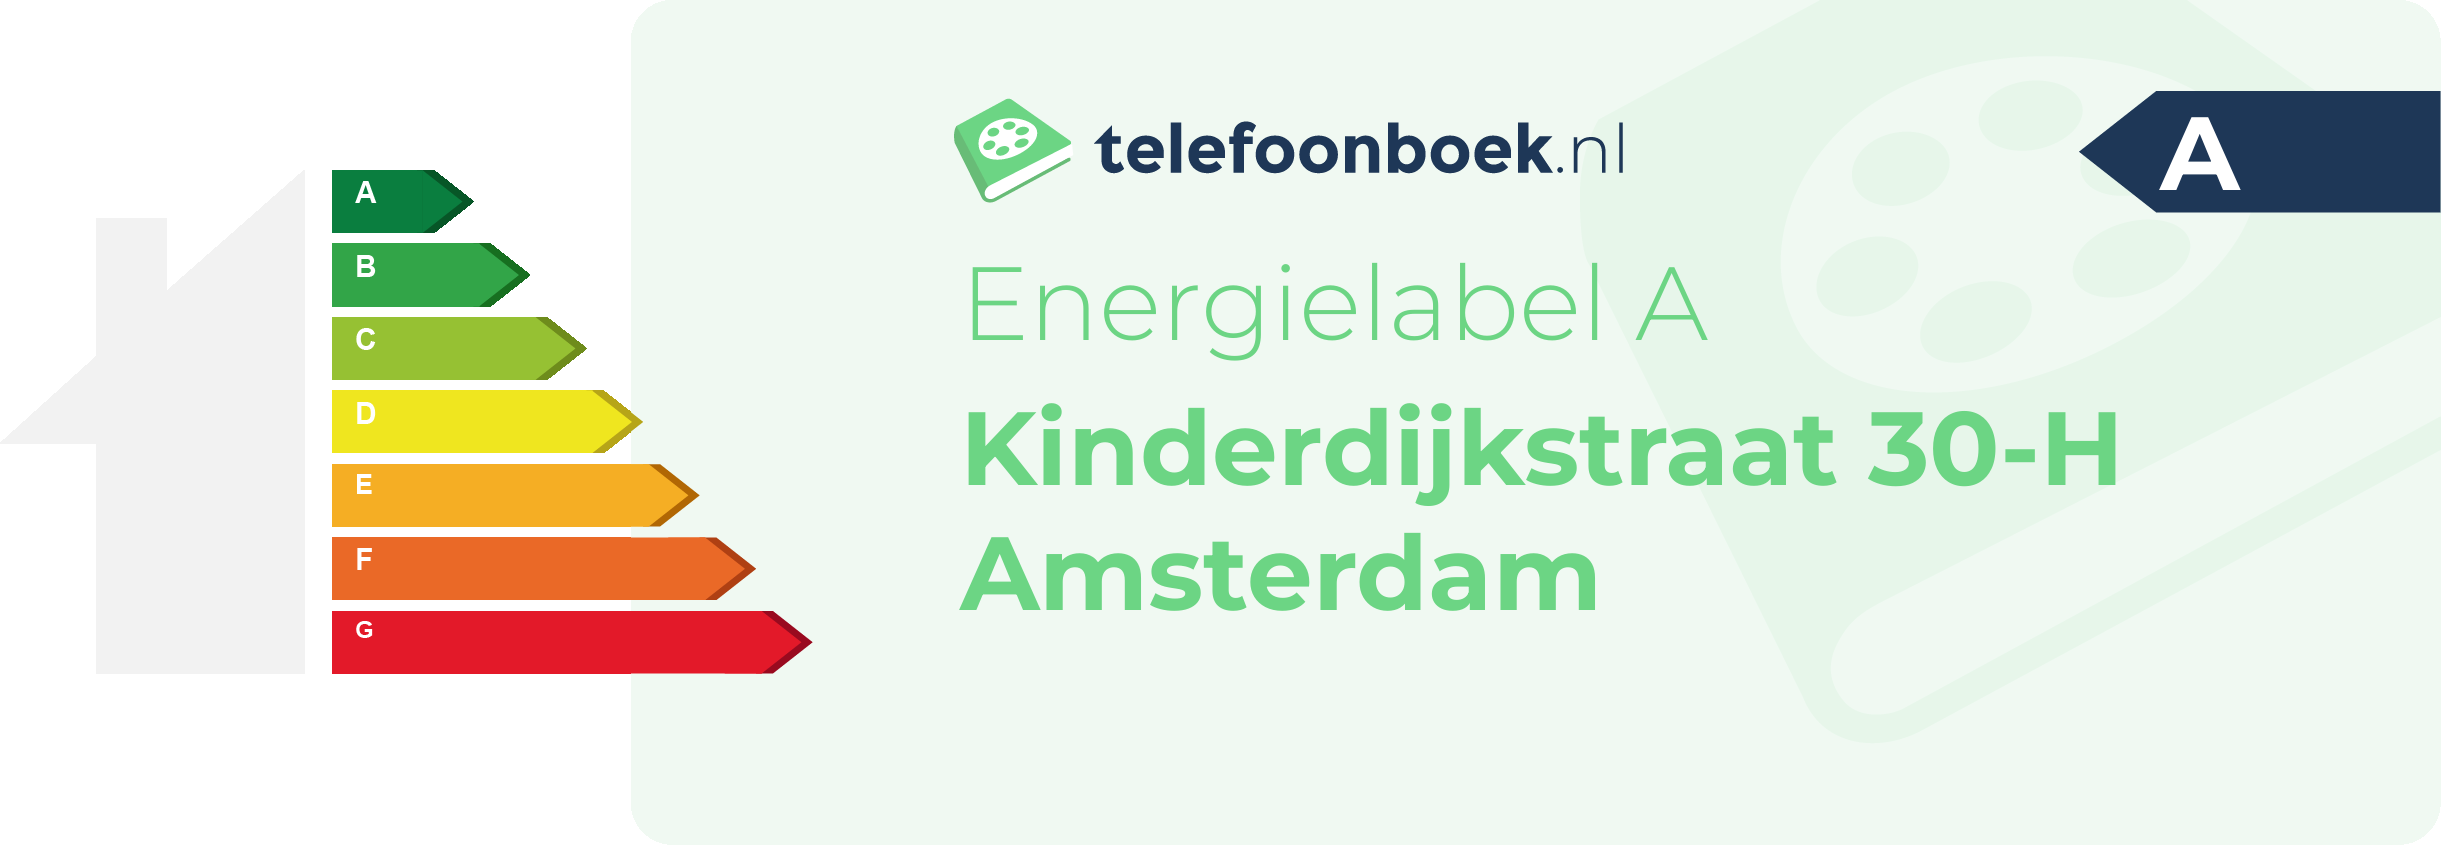 Energielabel Kinderdijkstraat 30-H Amsterdam